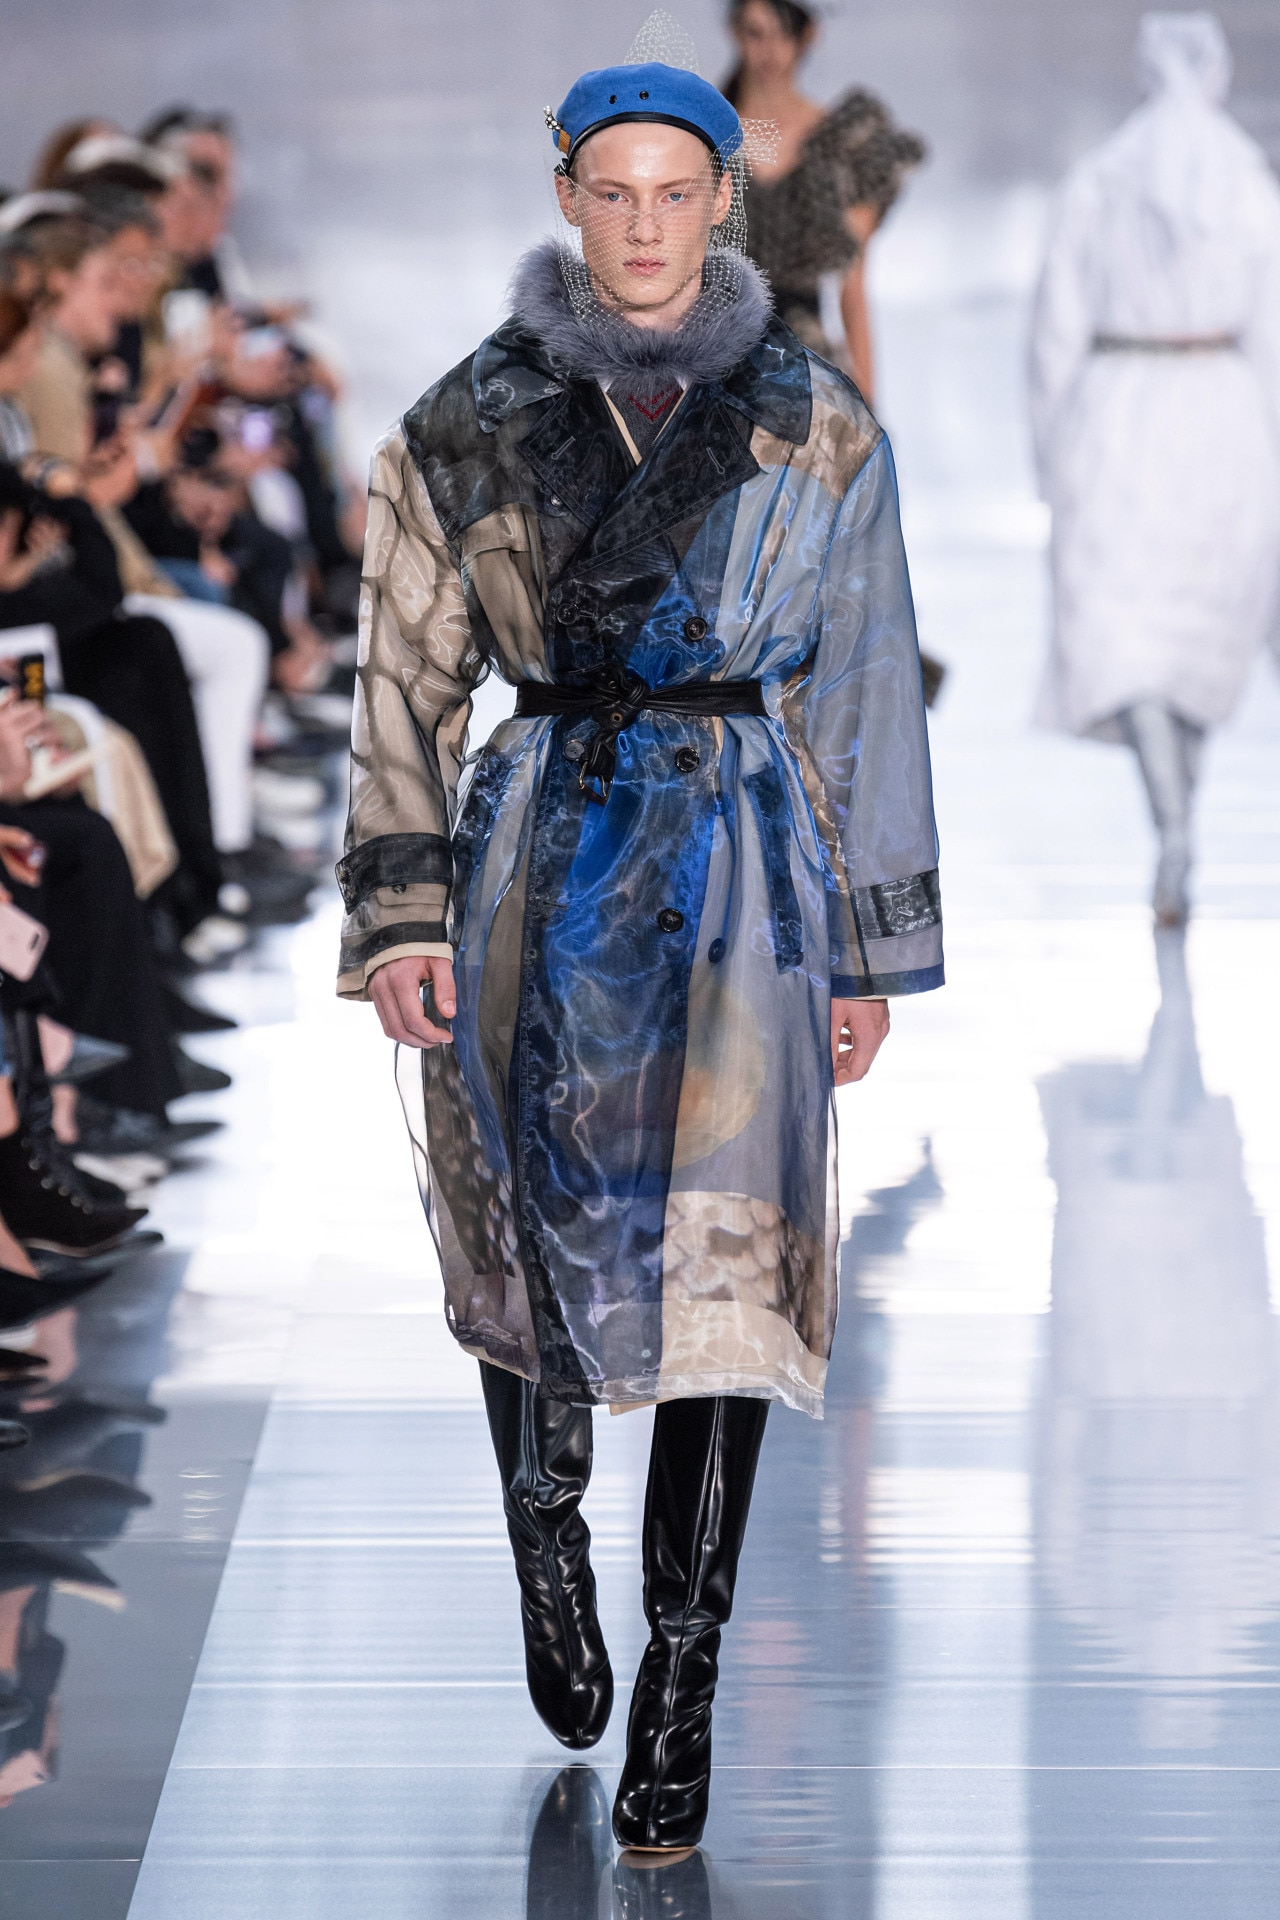 Suzy Menkes at Paris Fashion Week ready-to-wear spring summer 2020